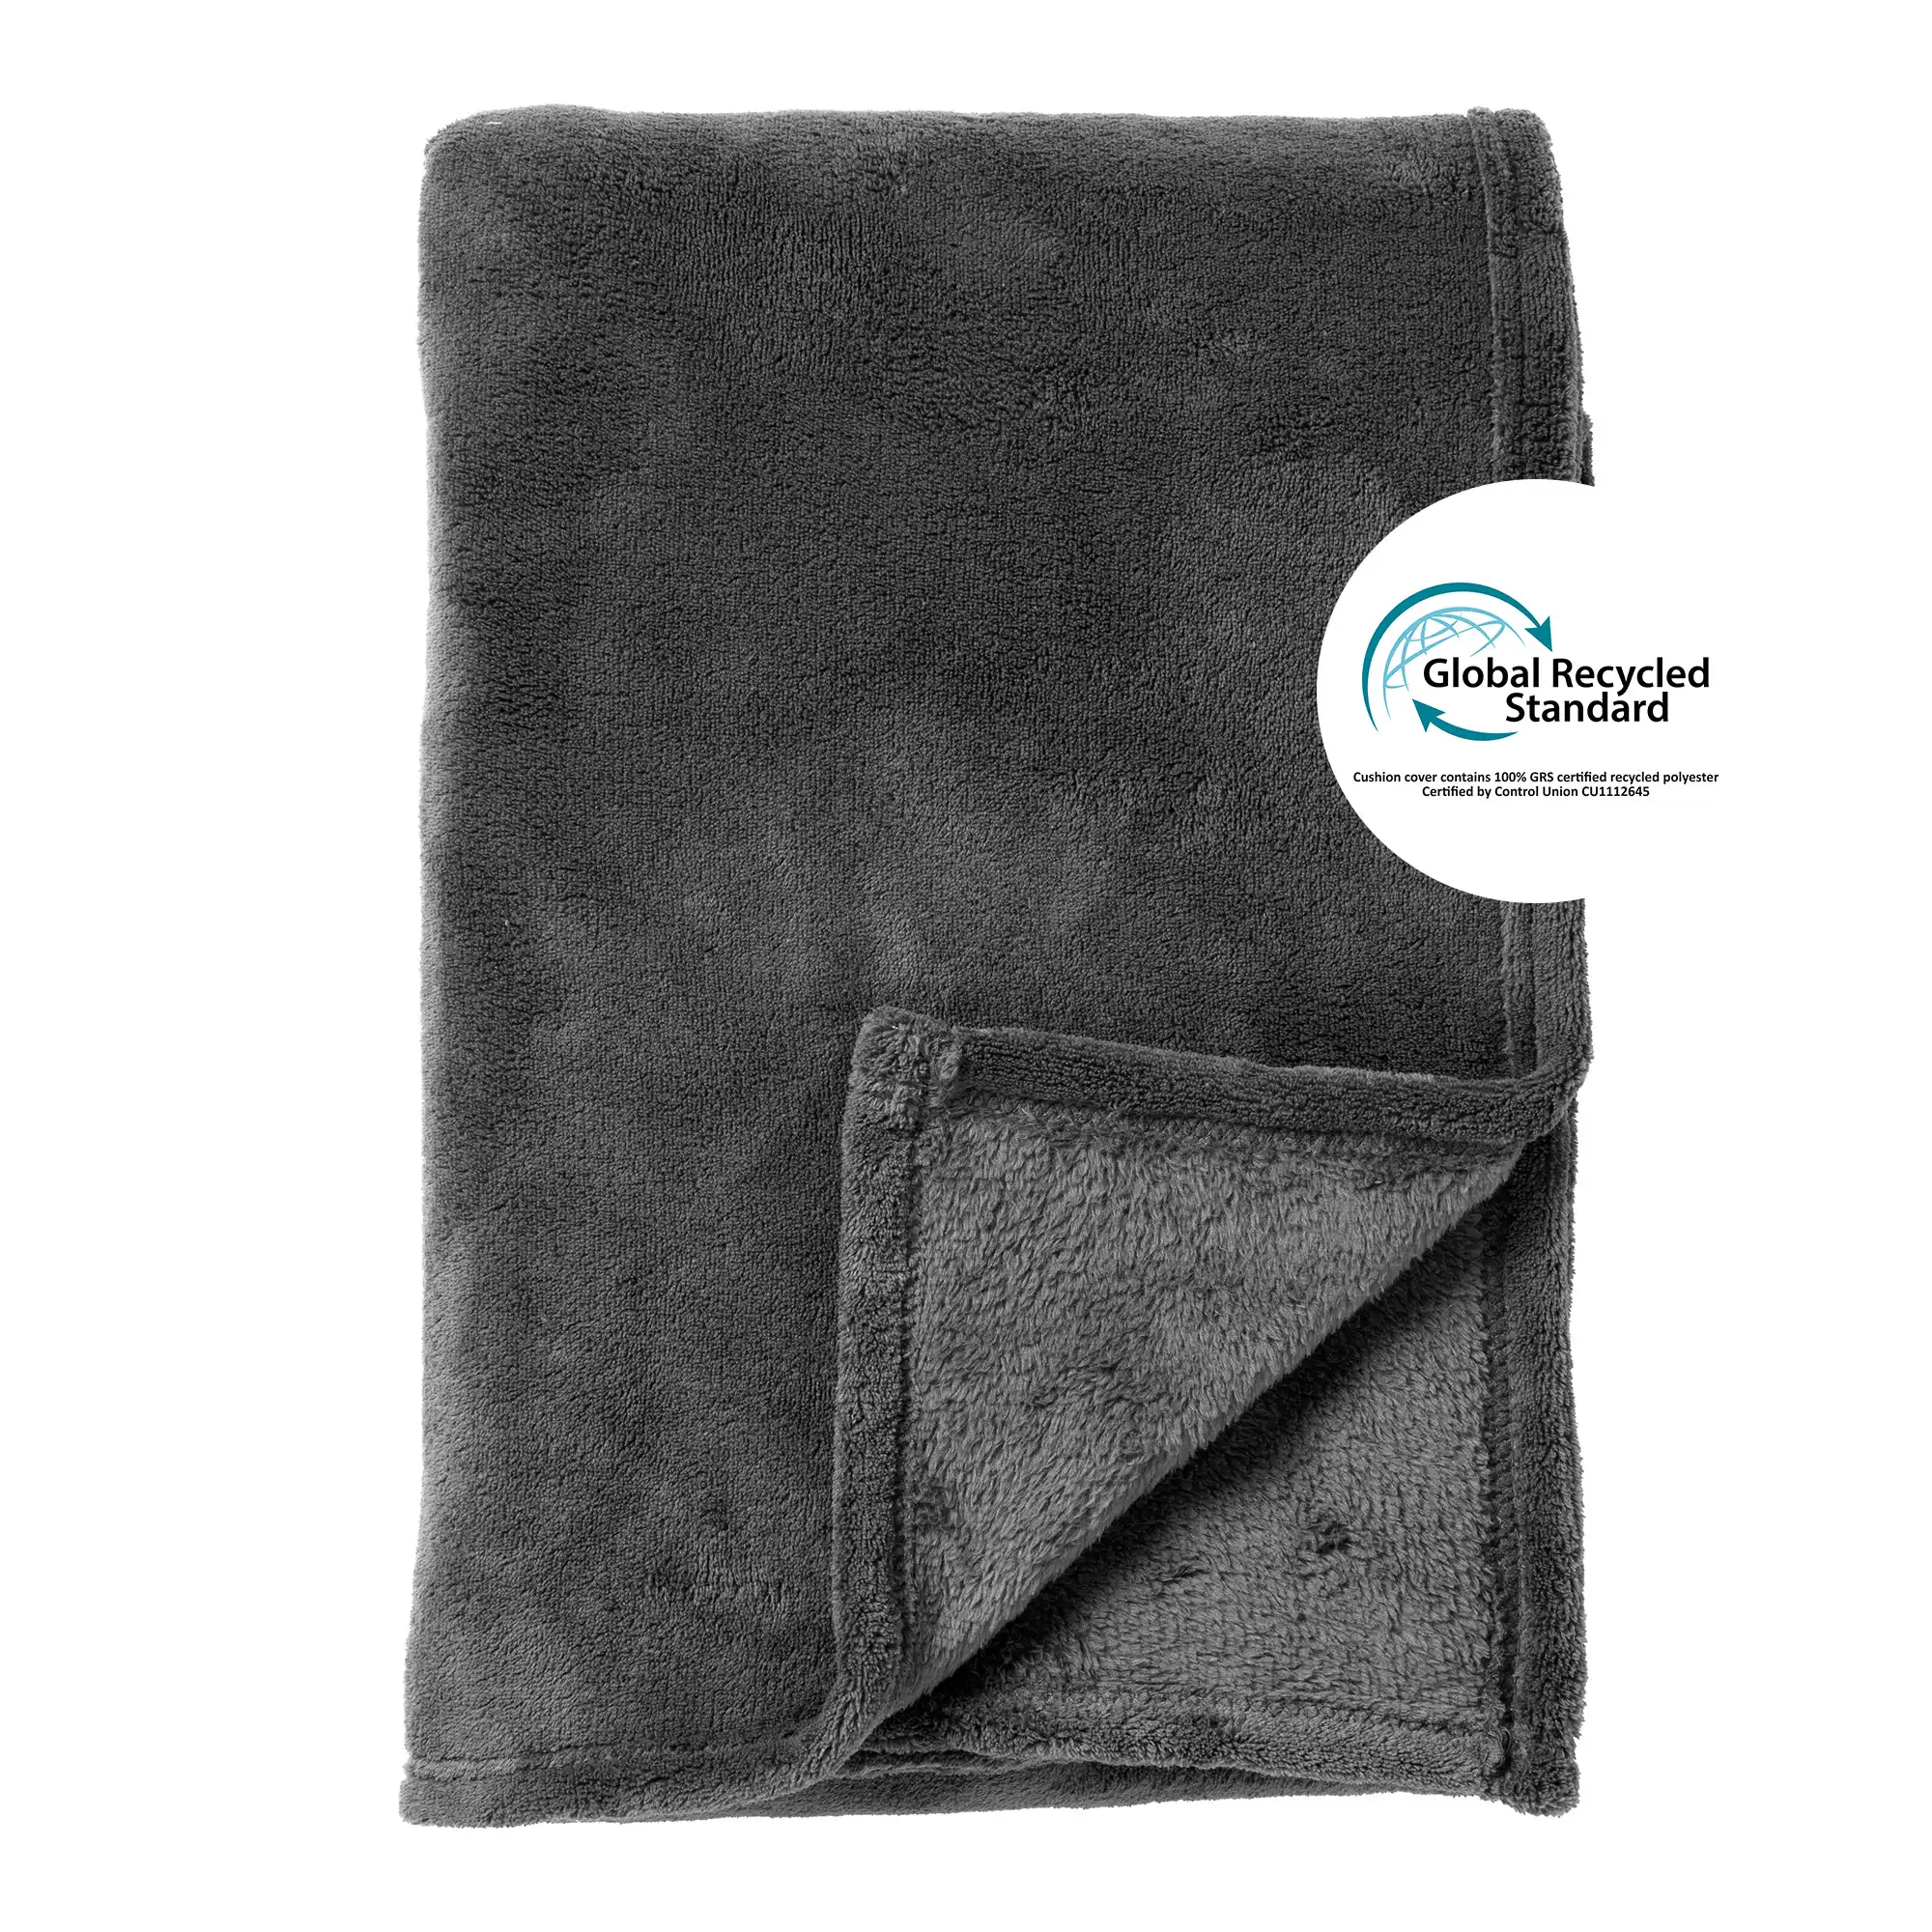 SIDNEY - Plaid Fleece deken van 100% gerecycled polyester – superzacht - Eco Line collectie 140x180 cm - Charcoal Gray - antraciet